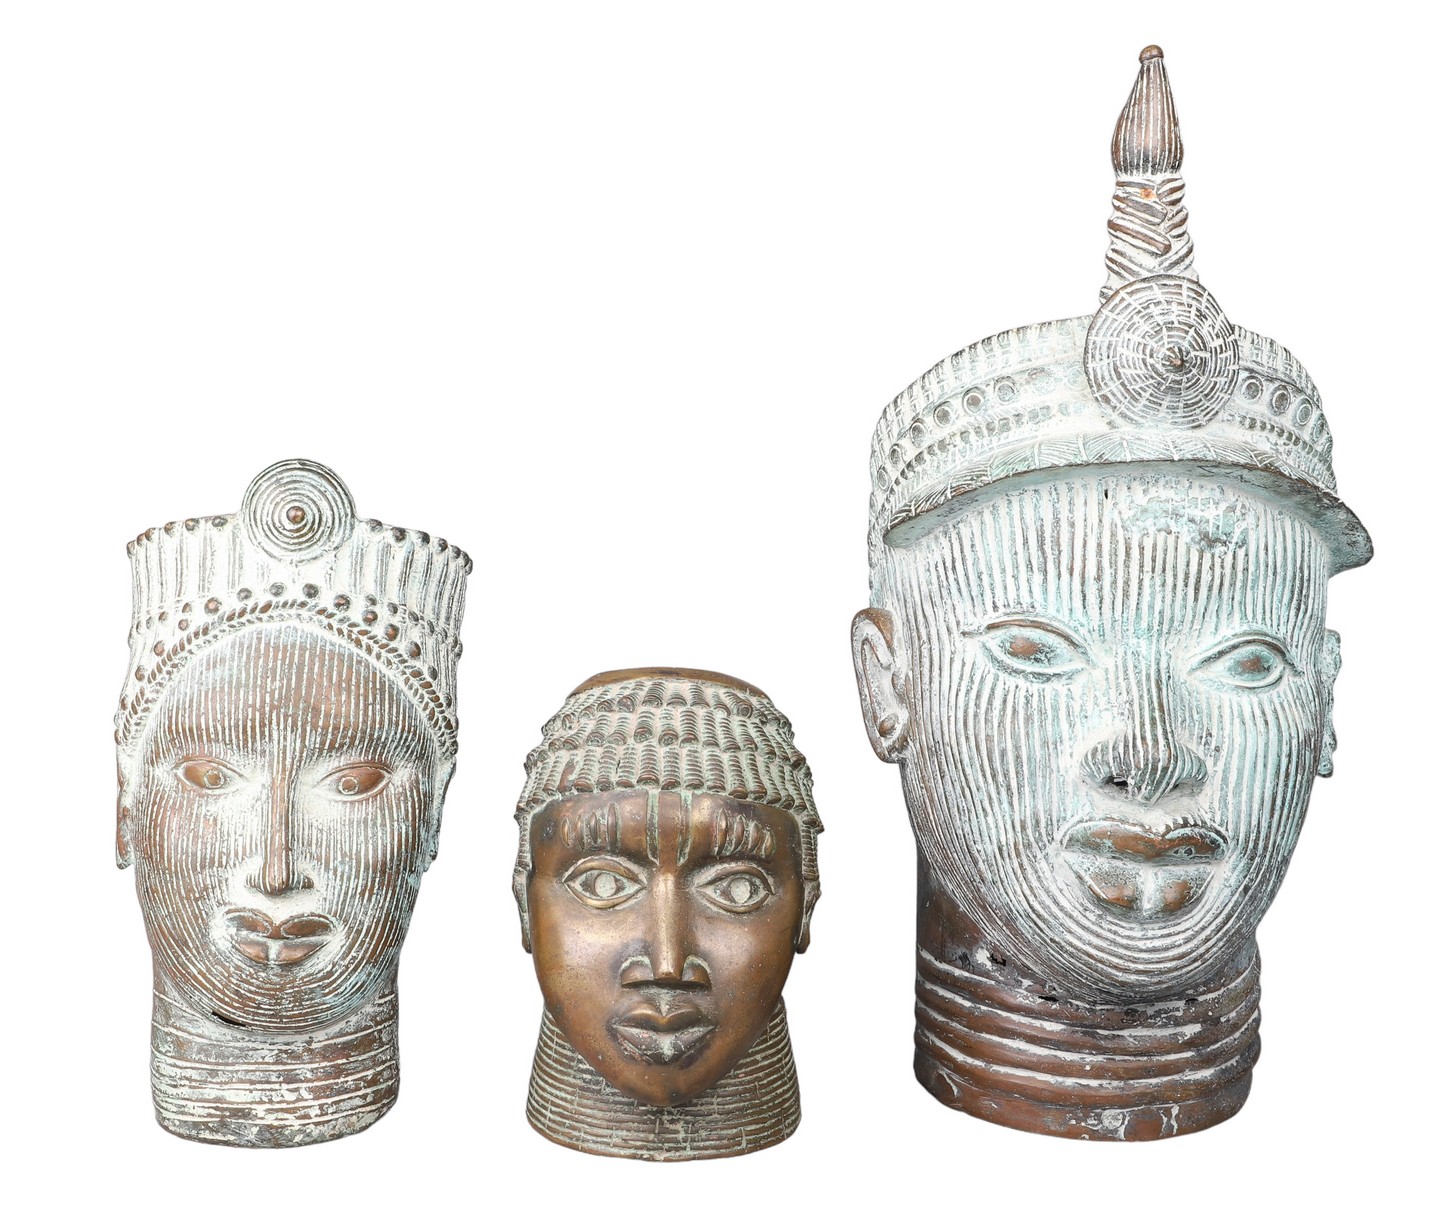  3 African Benin patinated bronze 2e06c8